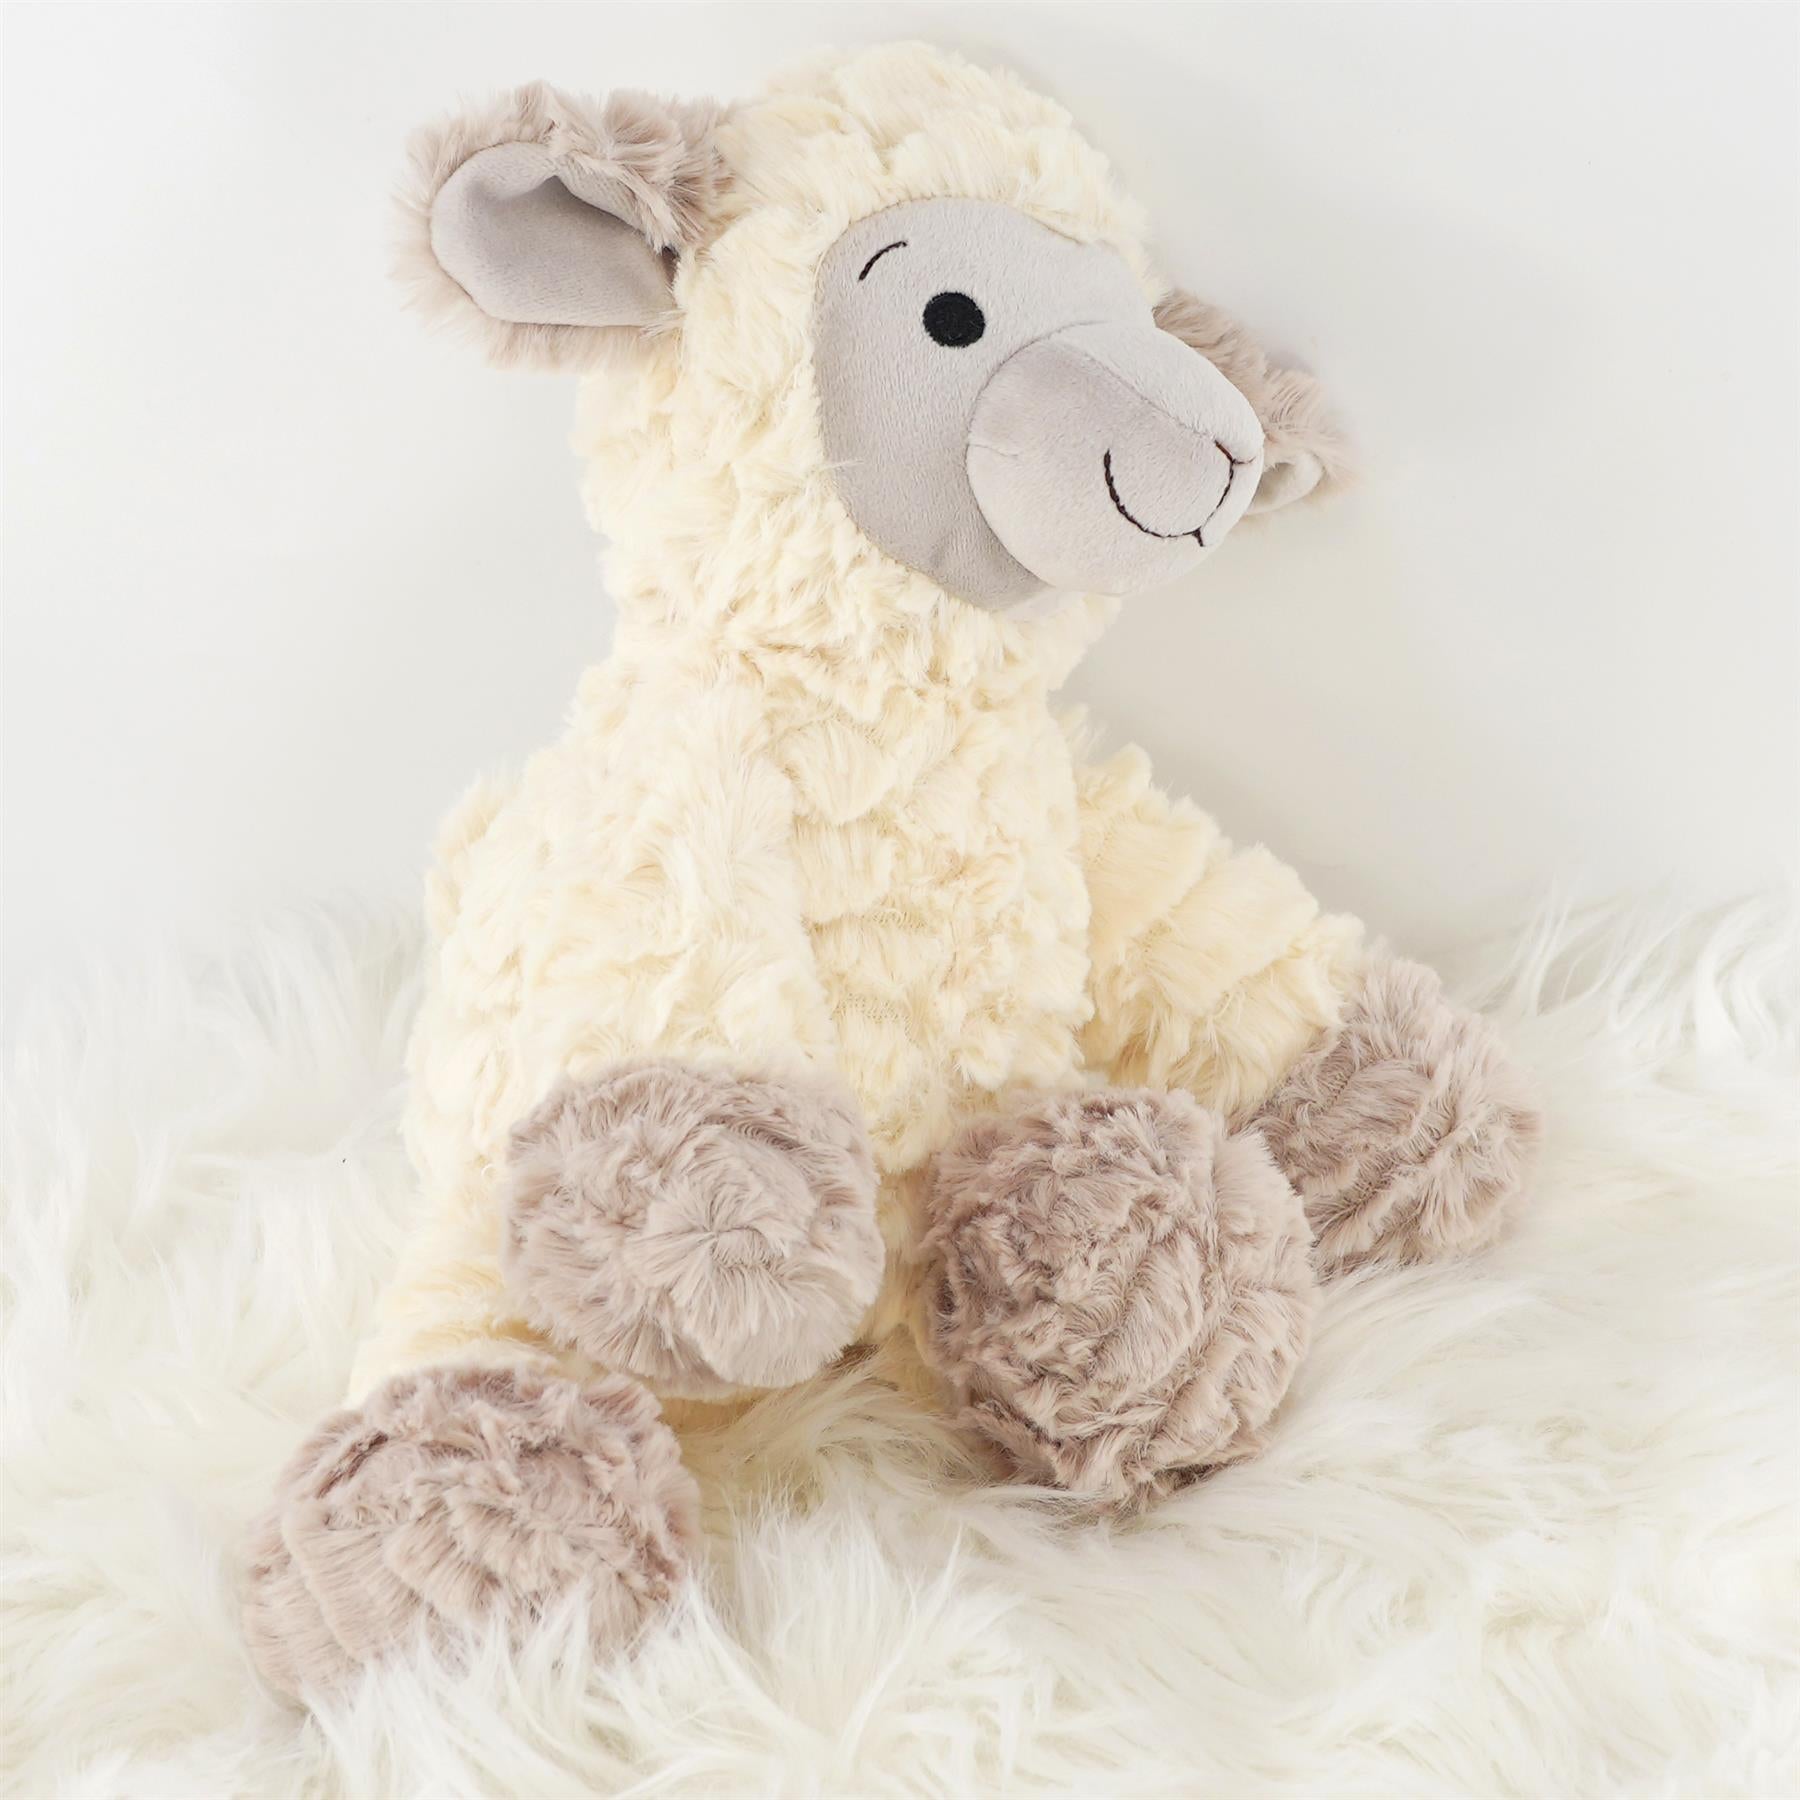 Plush Super Soft Lamb Cuddly Toy by The Magic Toy Shop - The Magic Toy Shop